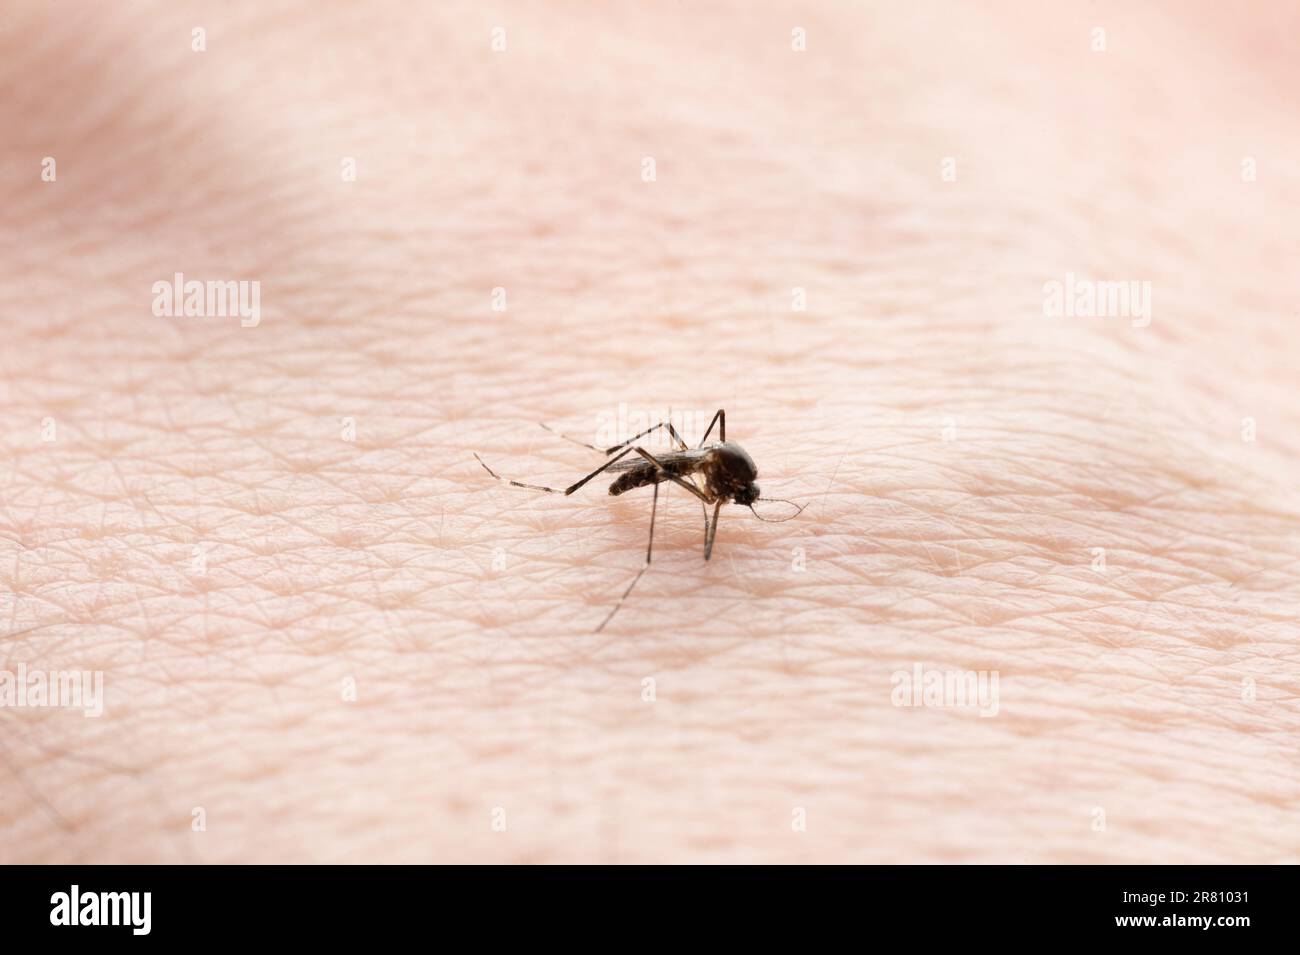 Zanzara prova morso macro pelle umana primo piano vista Foto Stock